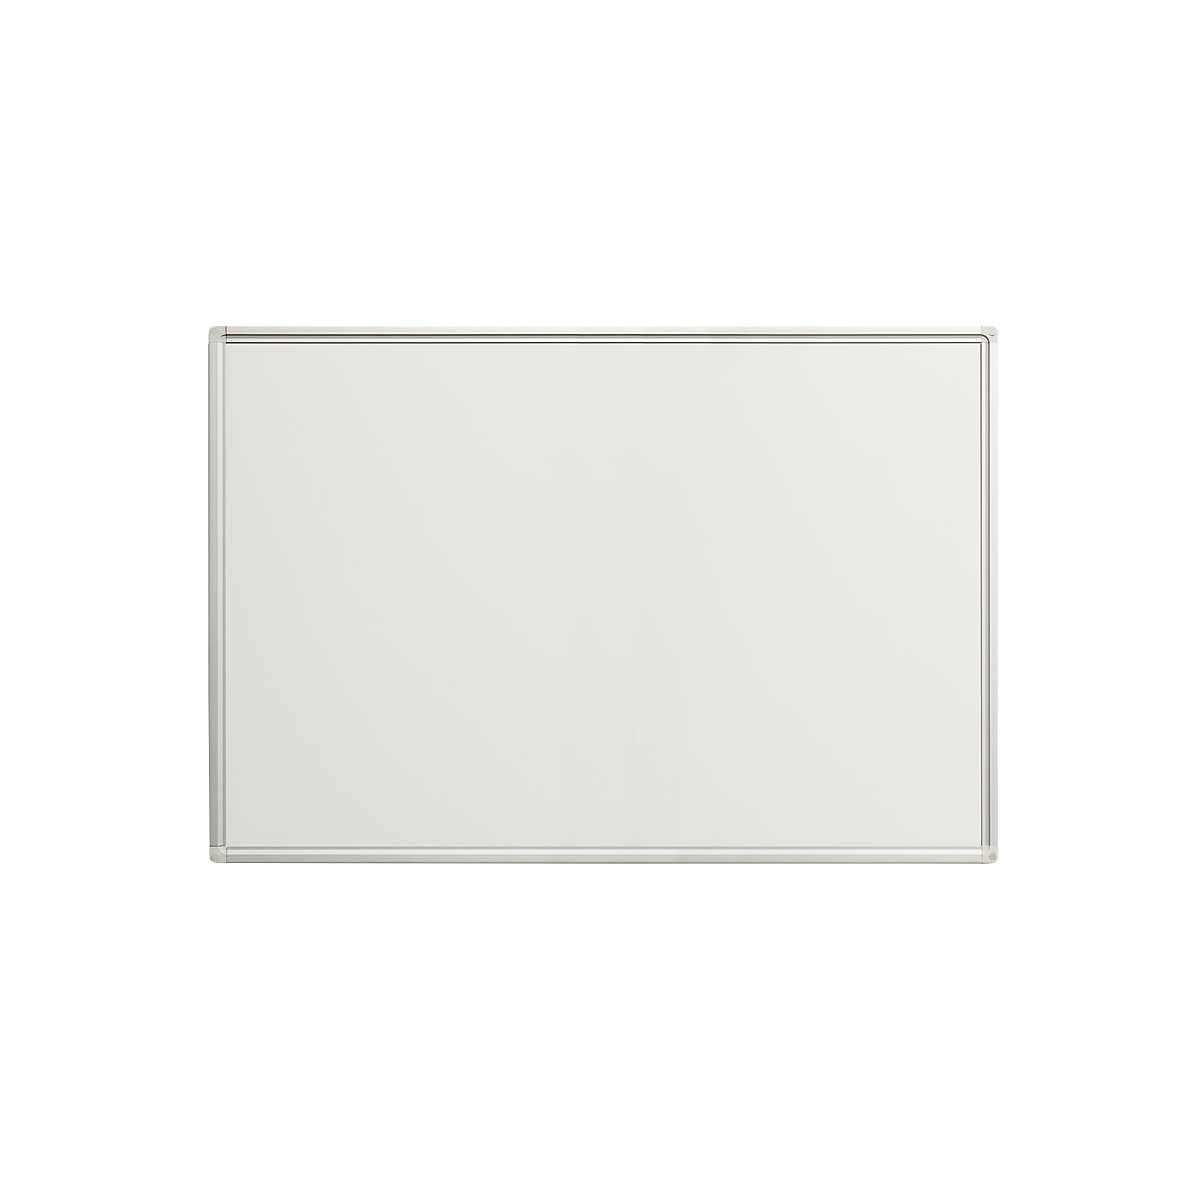 Economy whiteboard – eurokraft pro, sheet steel, painted, WxH 900 x 600 mm-9